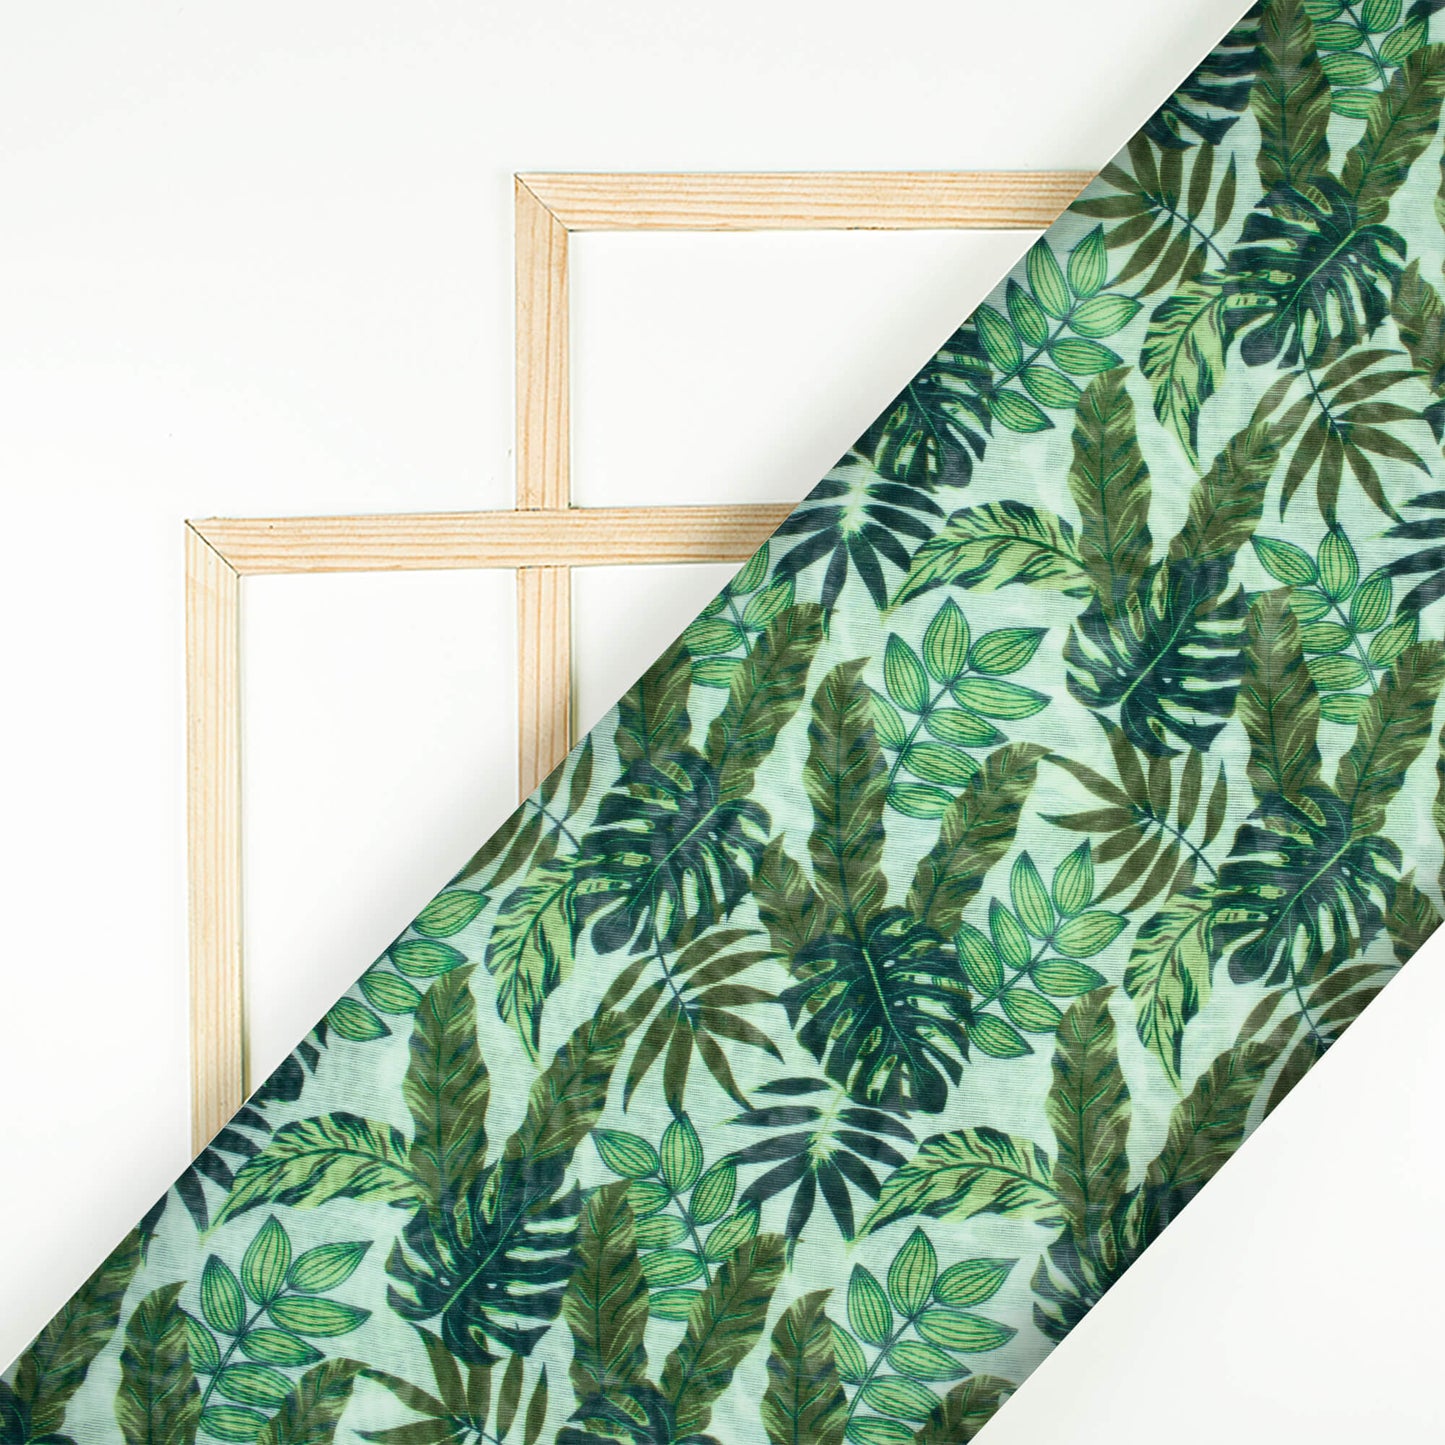 White And Green Leaf Pattern Digital Print Chanderi Fabric